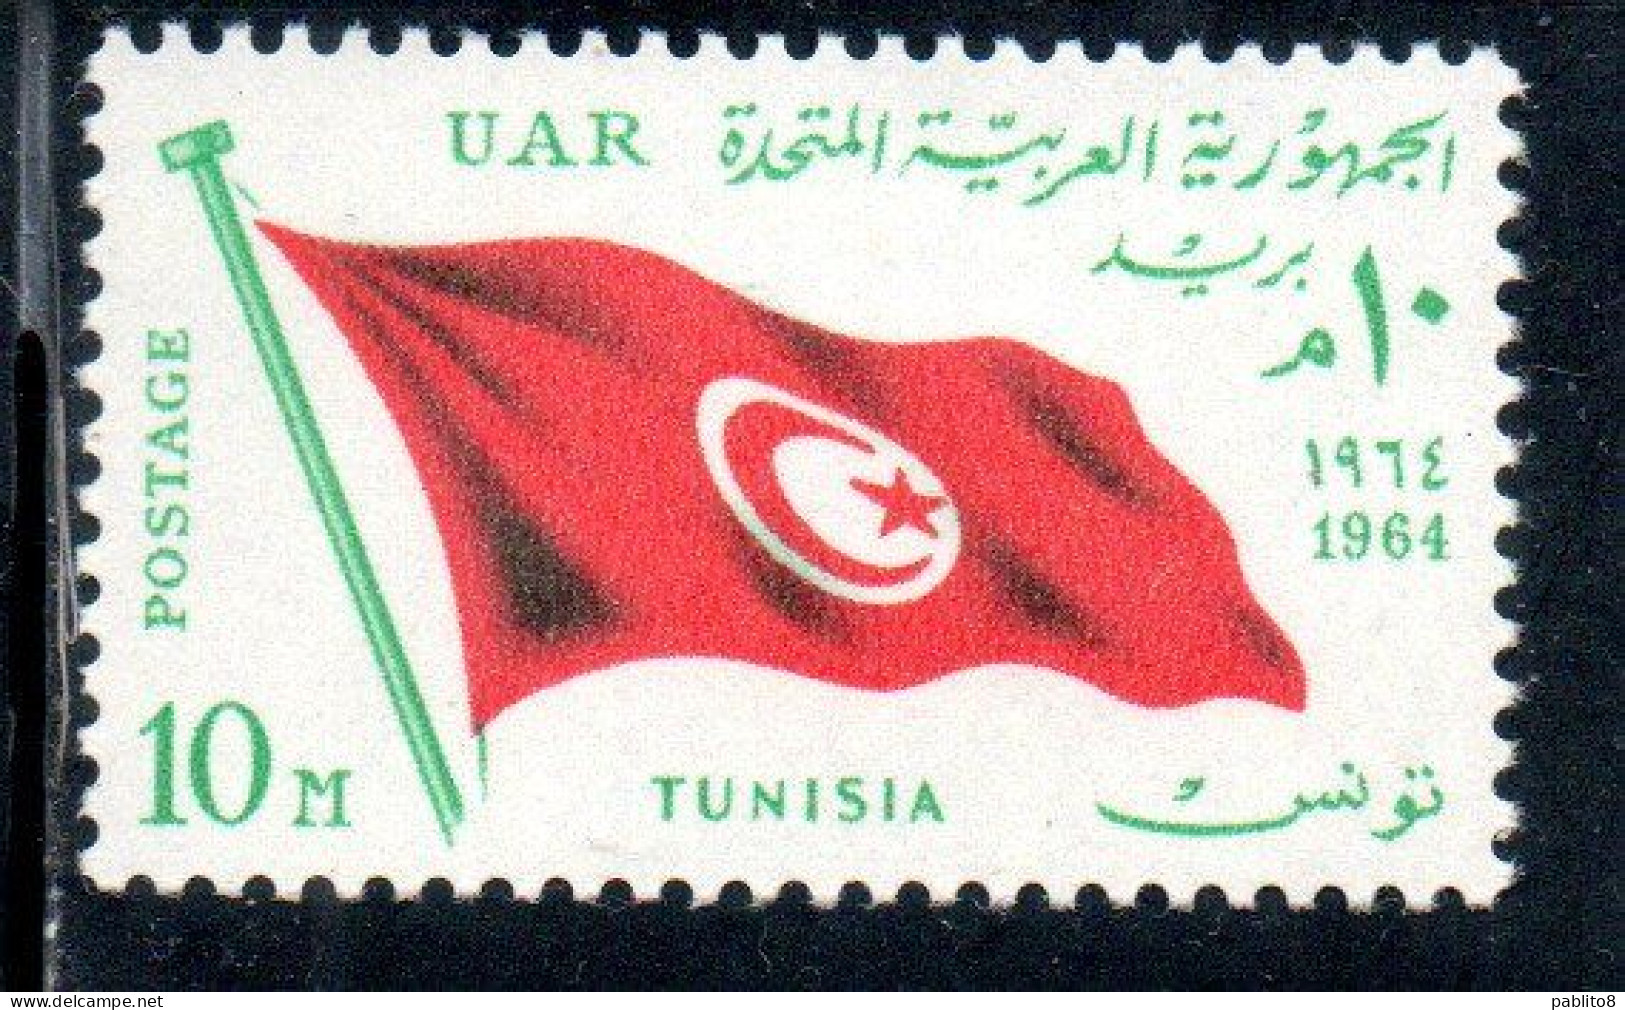 UAR EGYPT EGITTO 1964 SECOND MEETING OF HEADS STATE ARAB LEAGUE FLAG OF TUNISIA 10m MNH - Nuevos